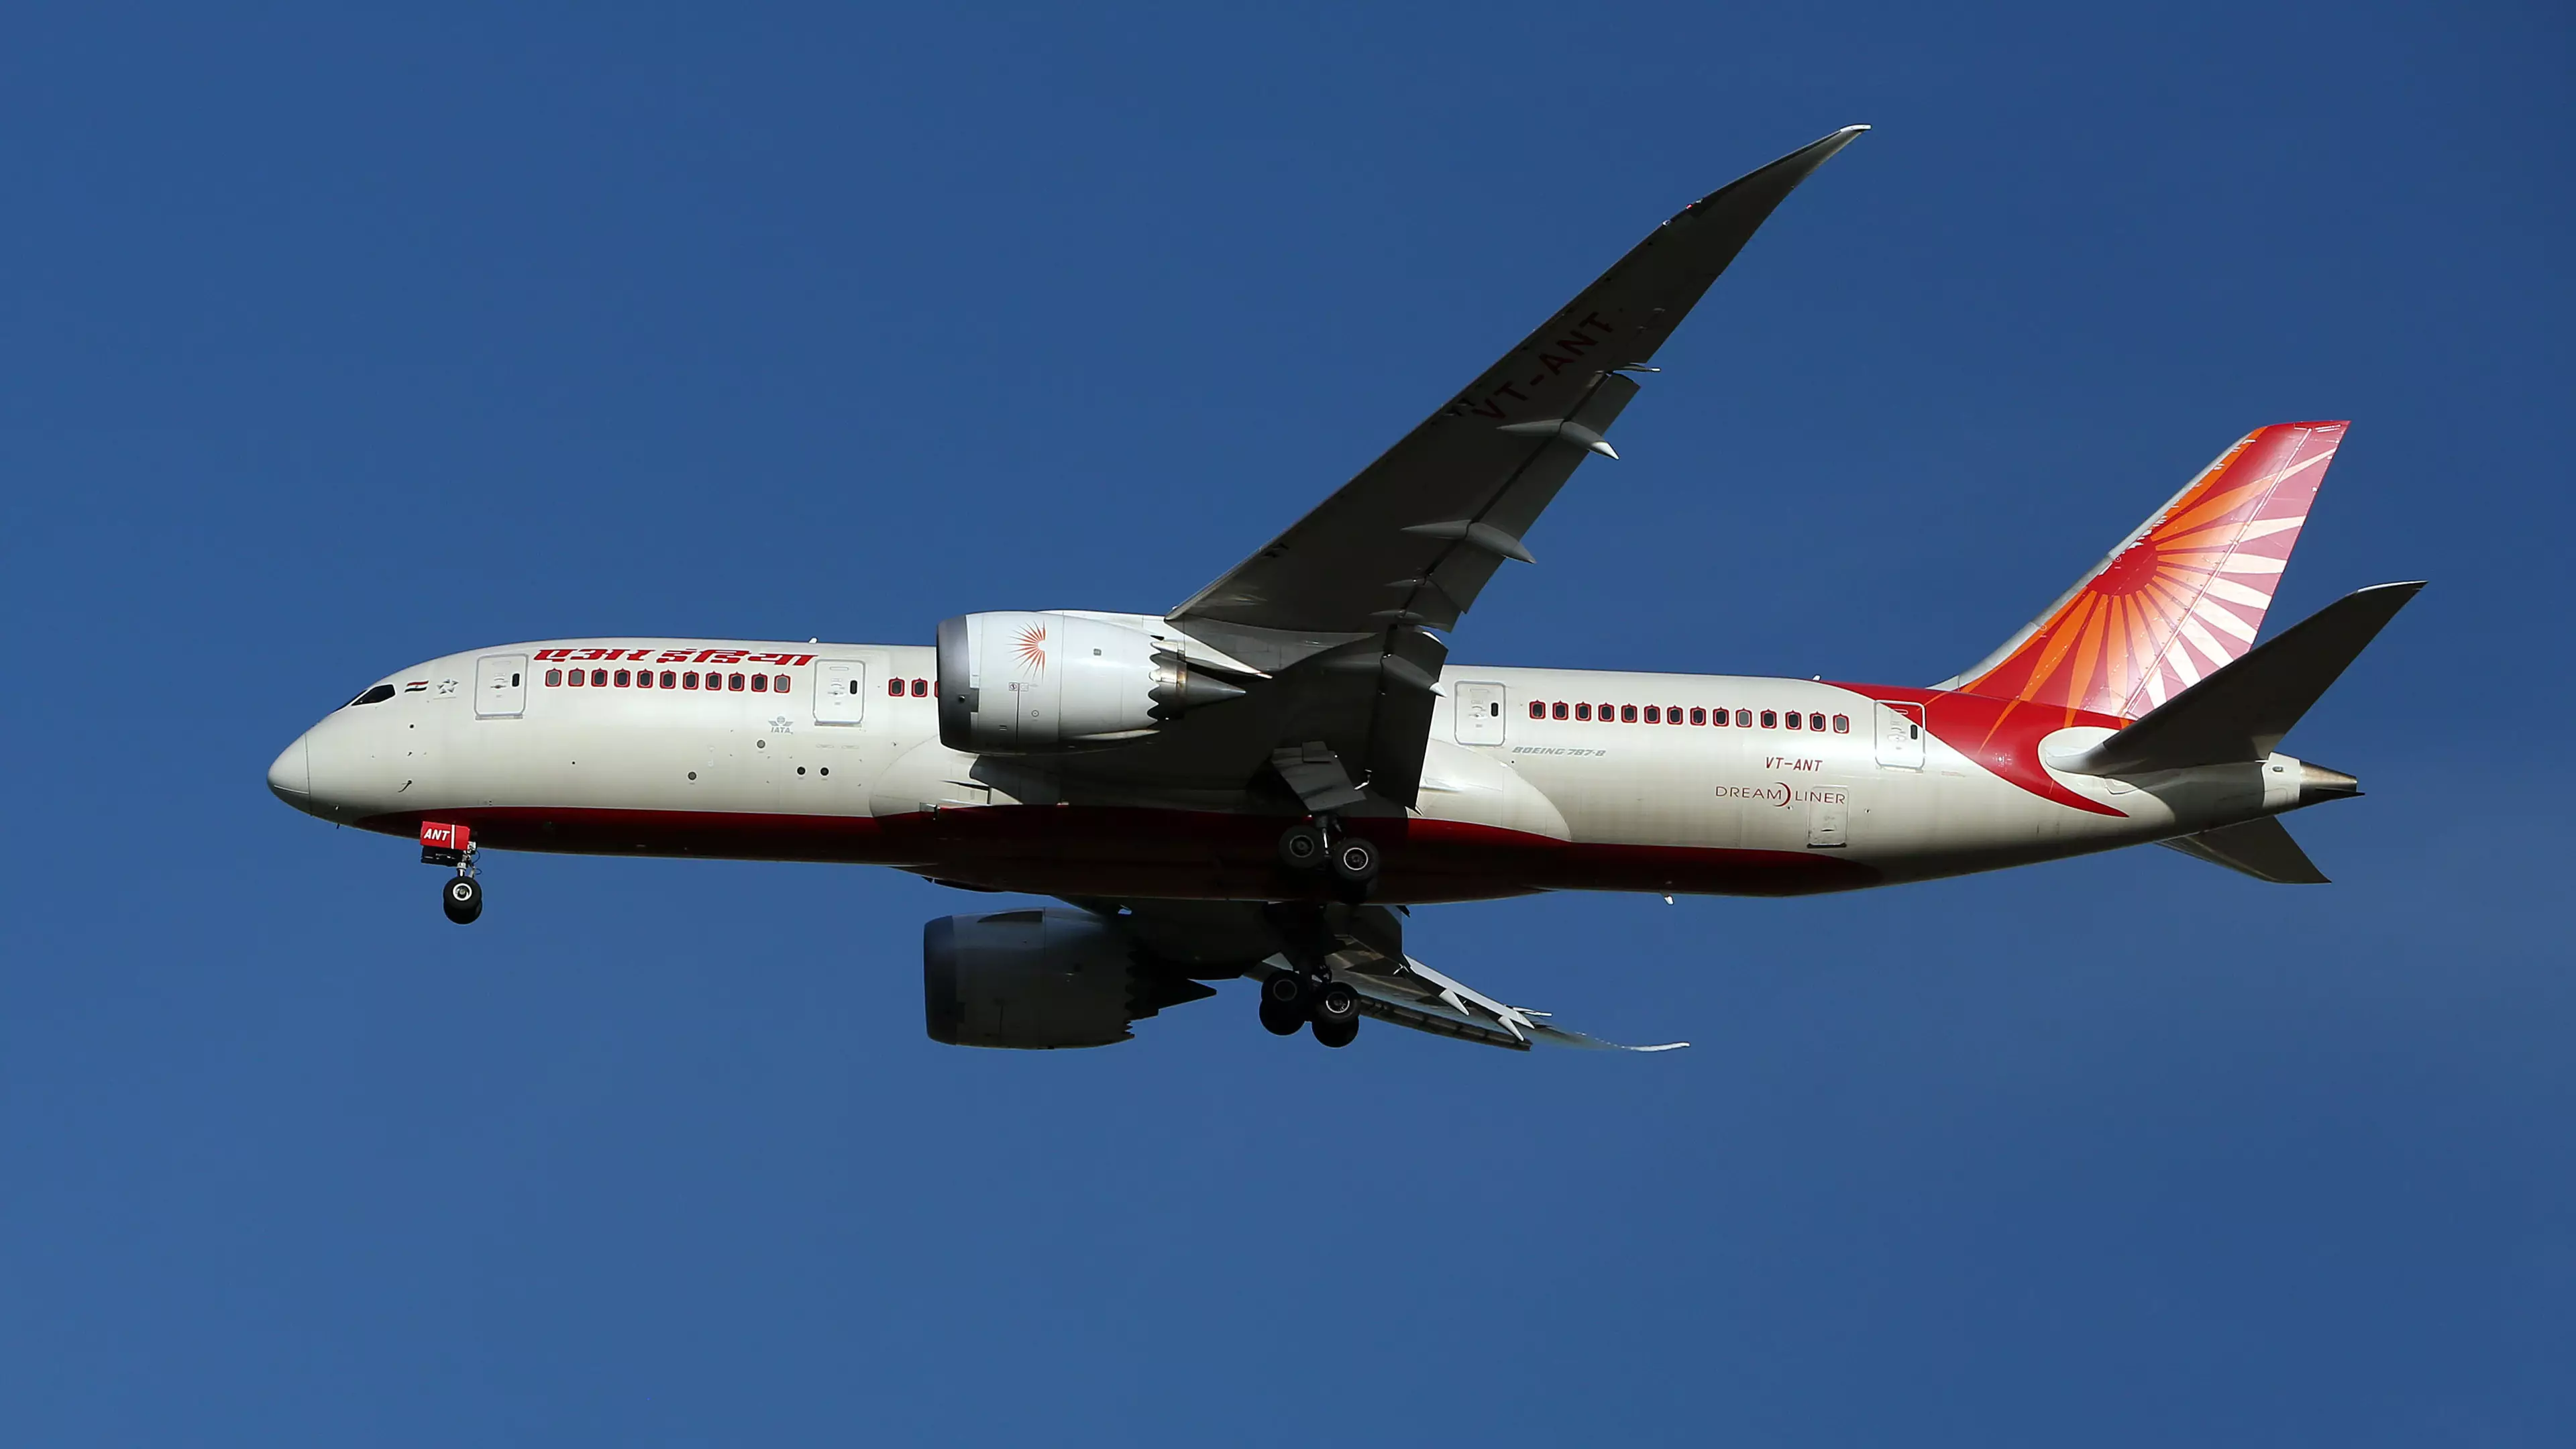 Turbulence Causes a Window Panel To Fall Off An Indian Aeroplane